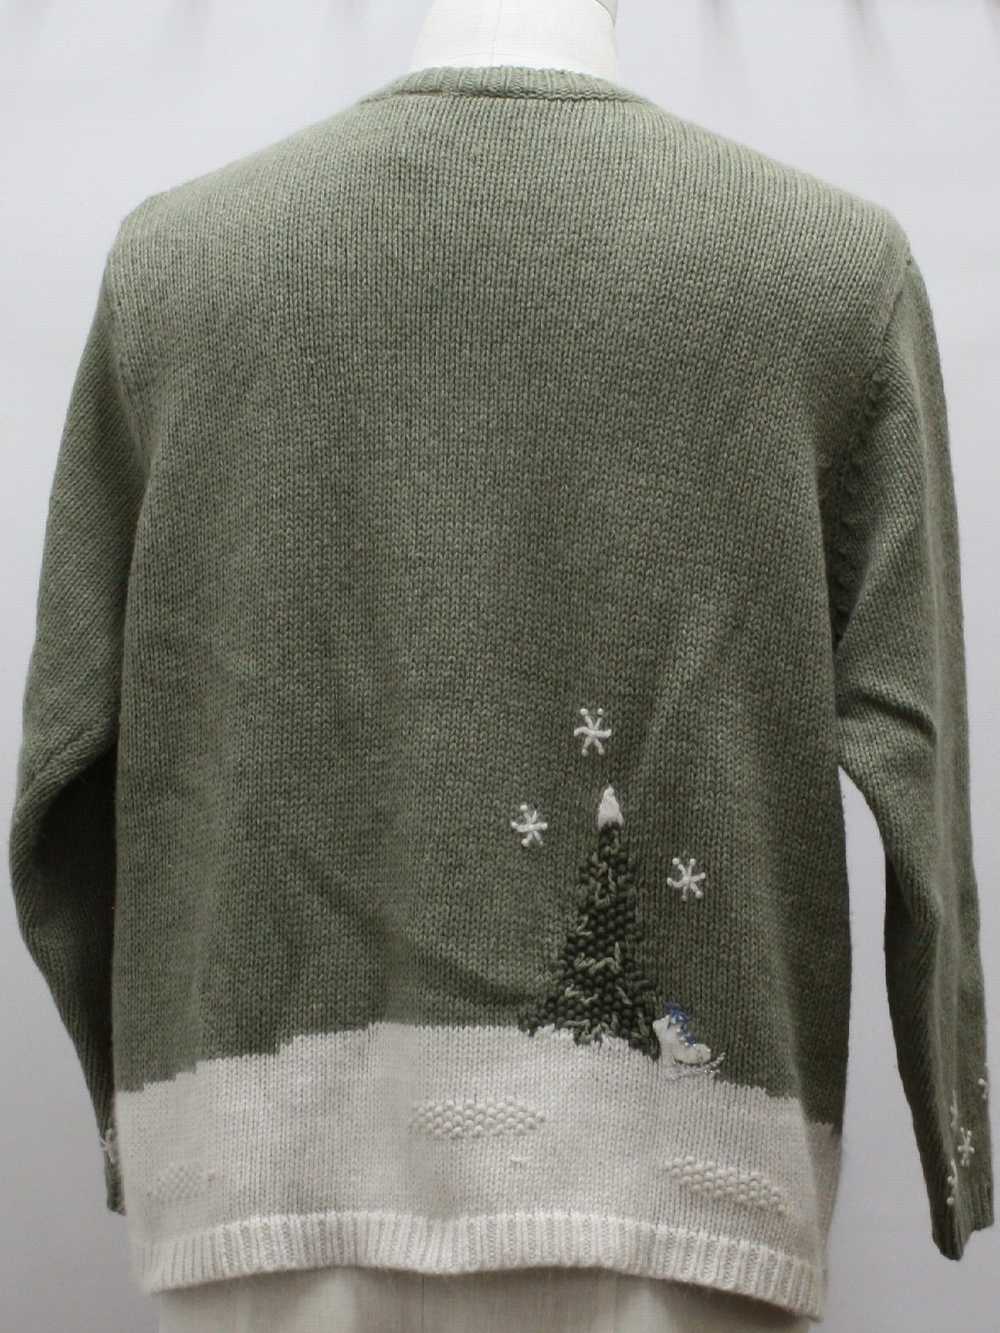 Croft and Barrow Unisex Ugly Christmas Sweater - image 3